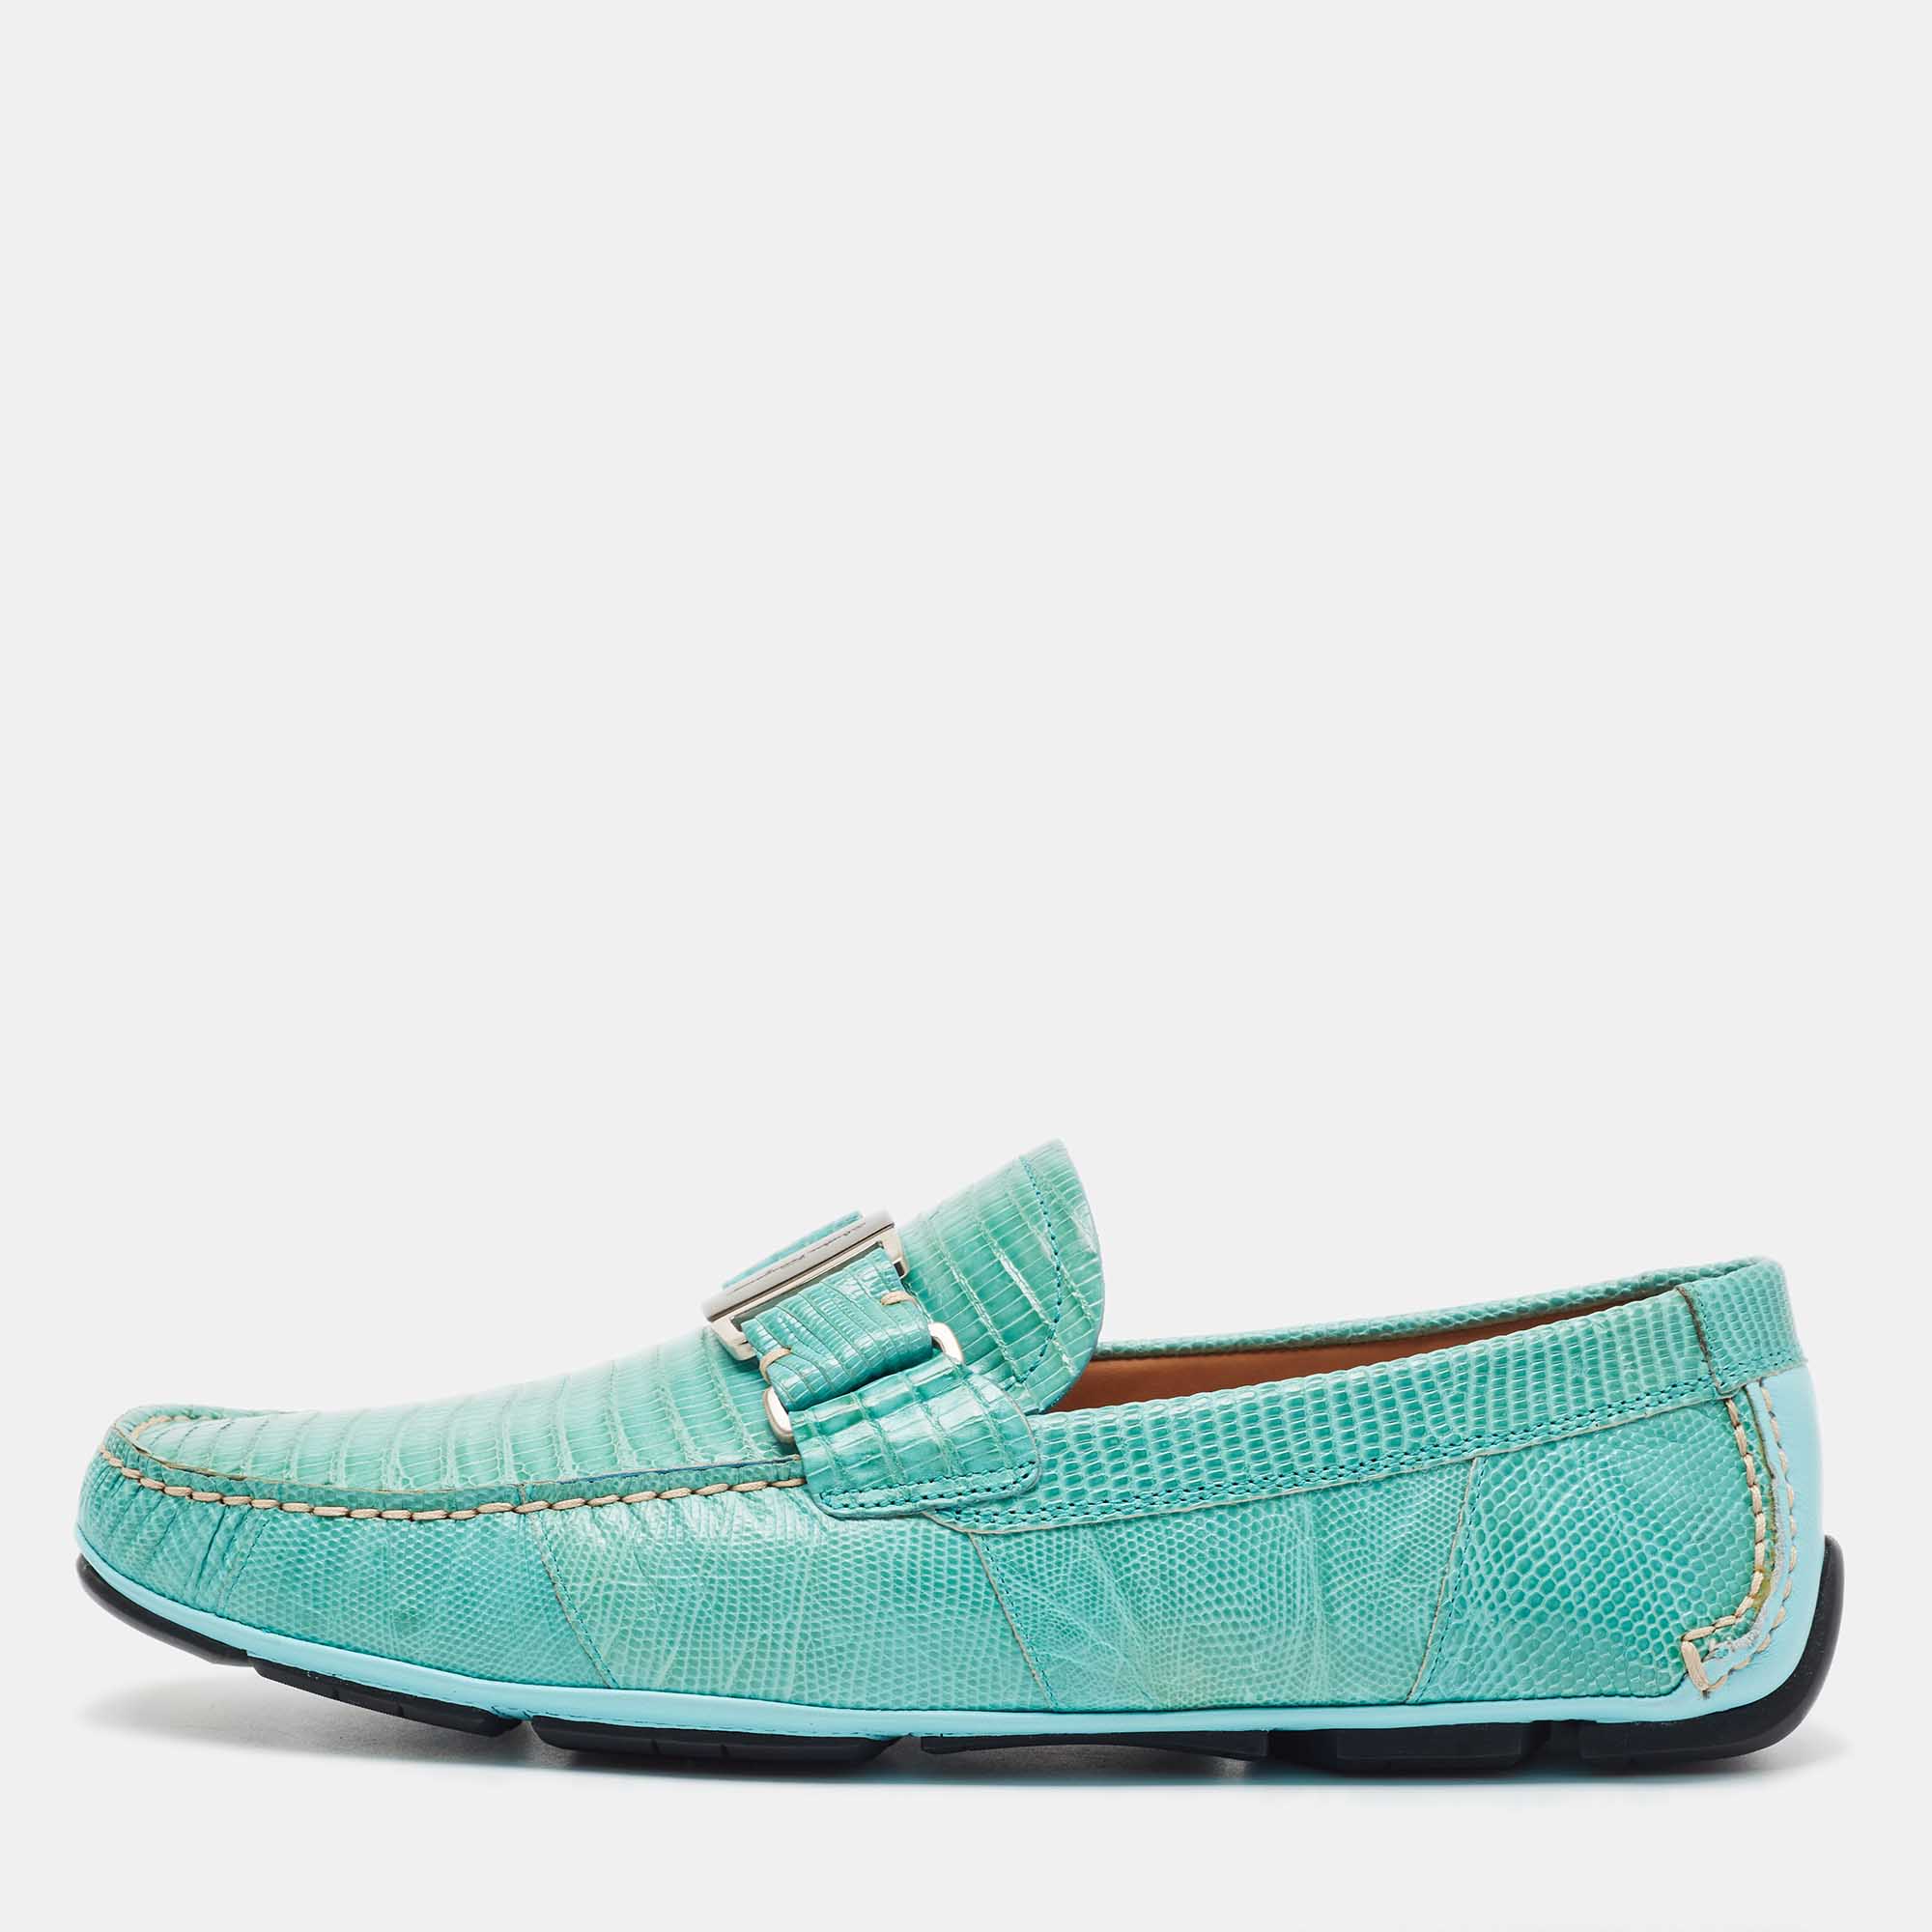 Pre-owned Ferragamo Aqua Green Lizard Sardegna Slip On Loafers Size 41